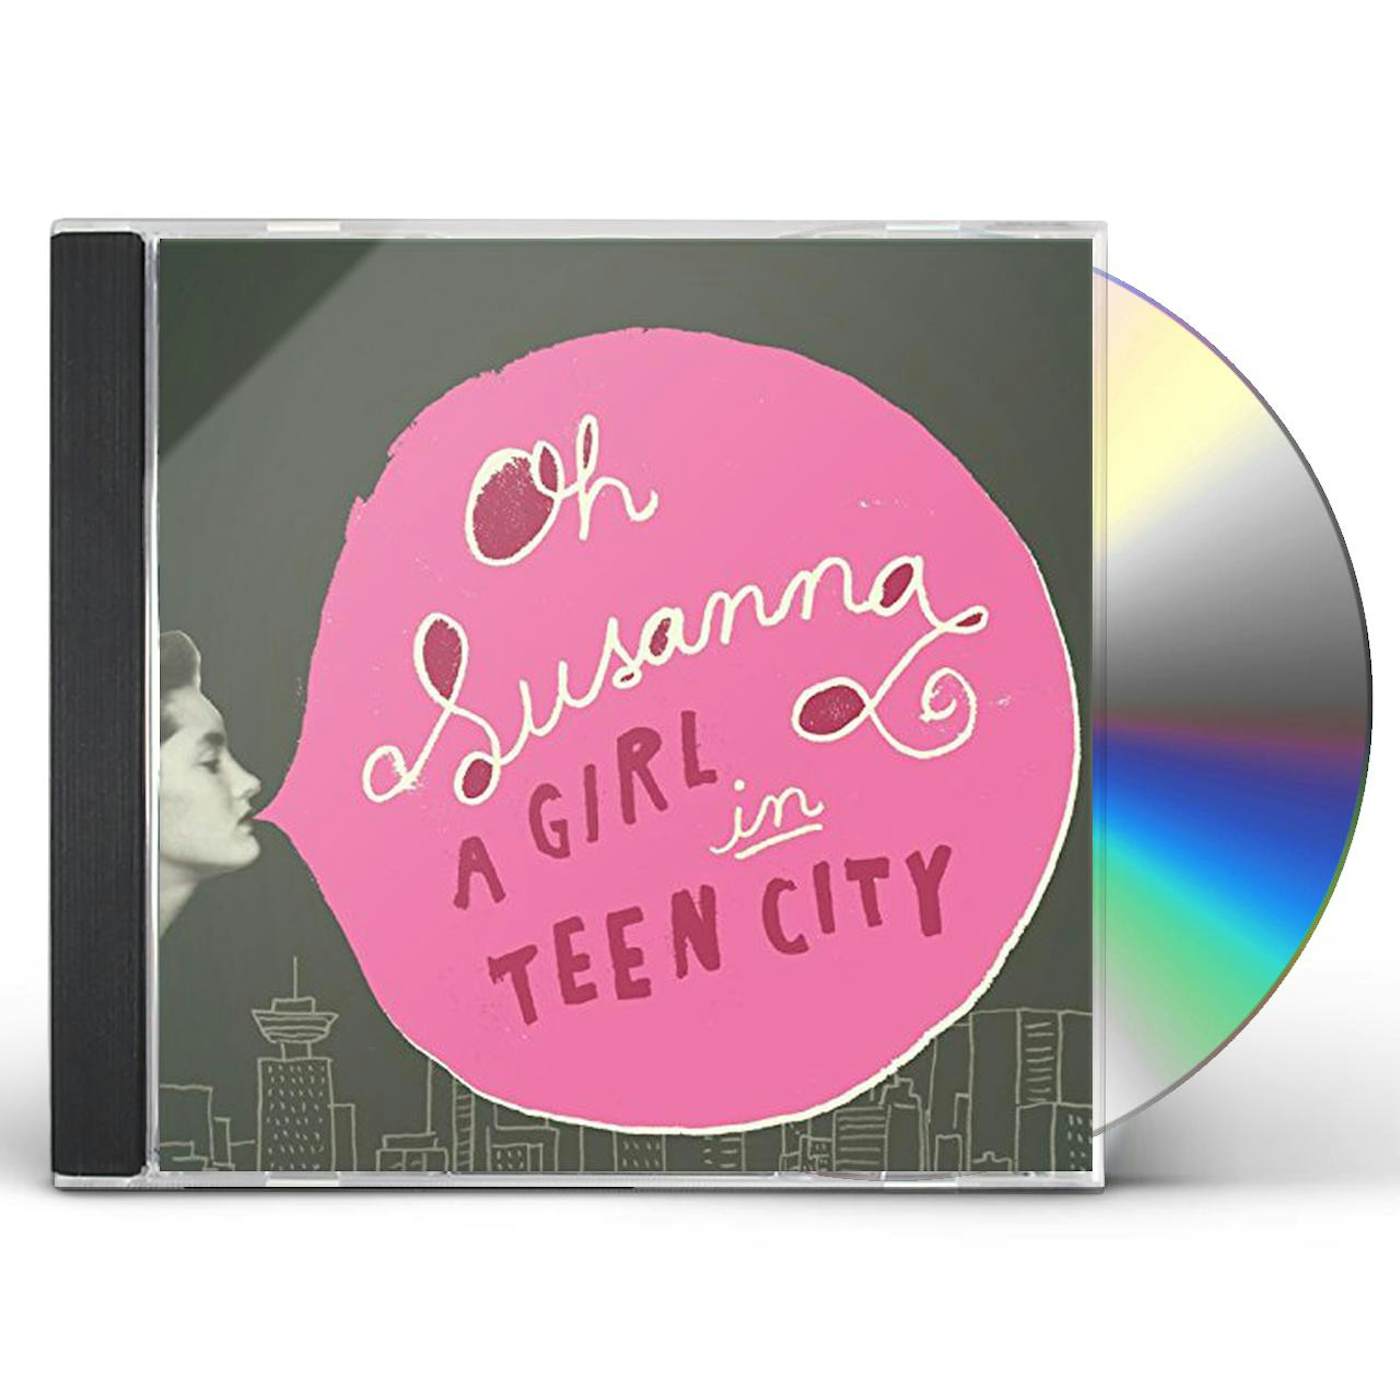 OH SUSANNA GIRL IN TEEN CITY CD